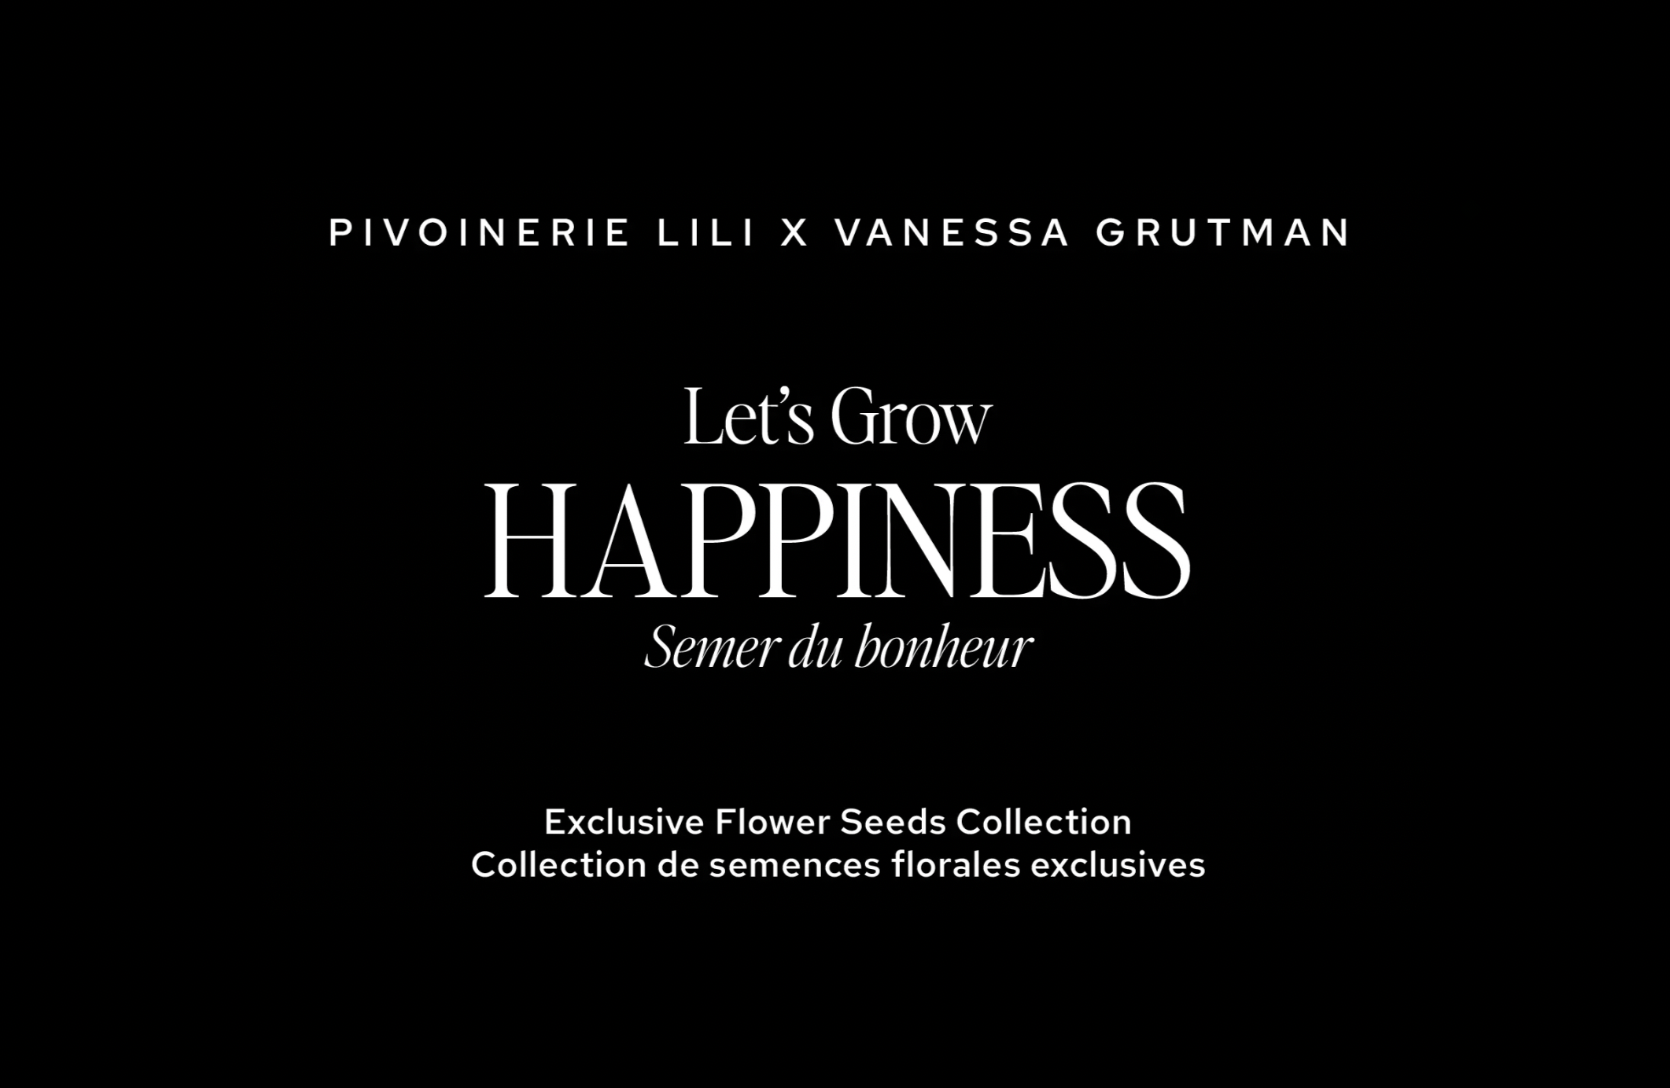 Pivoinerie Lili x Vanessa Grutman - Let's GROW Happiness